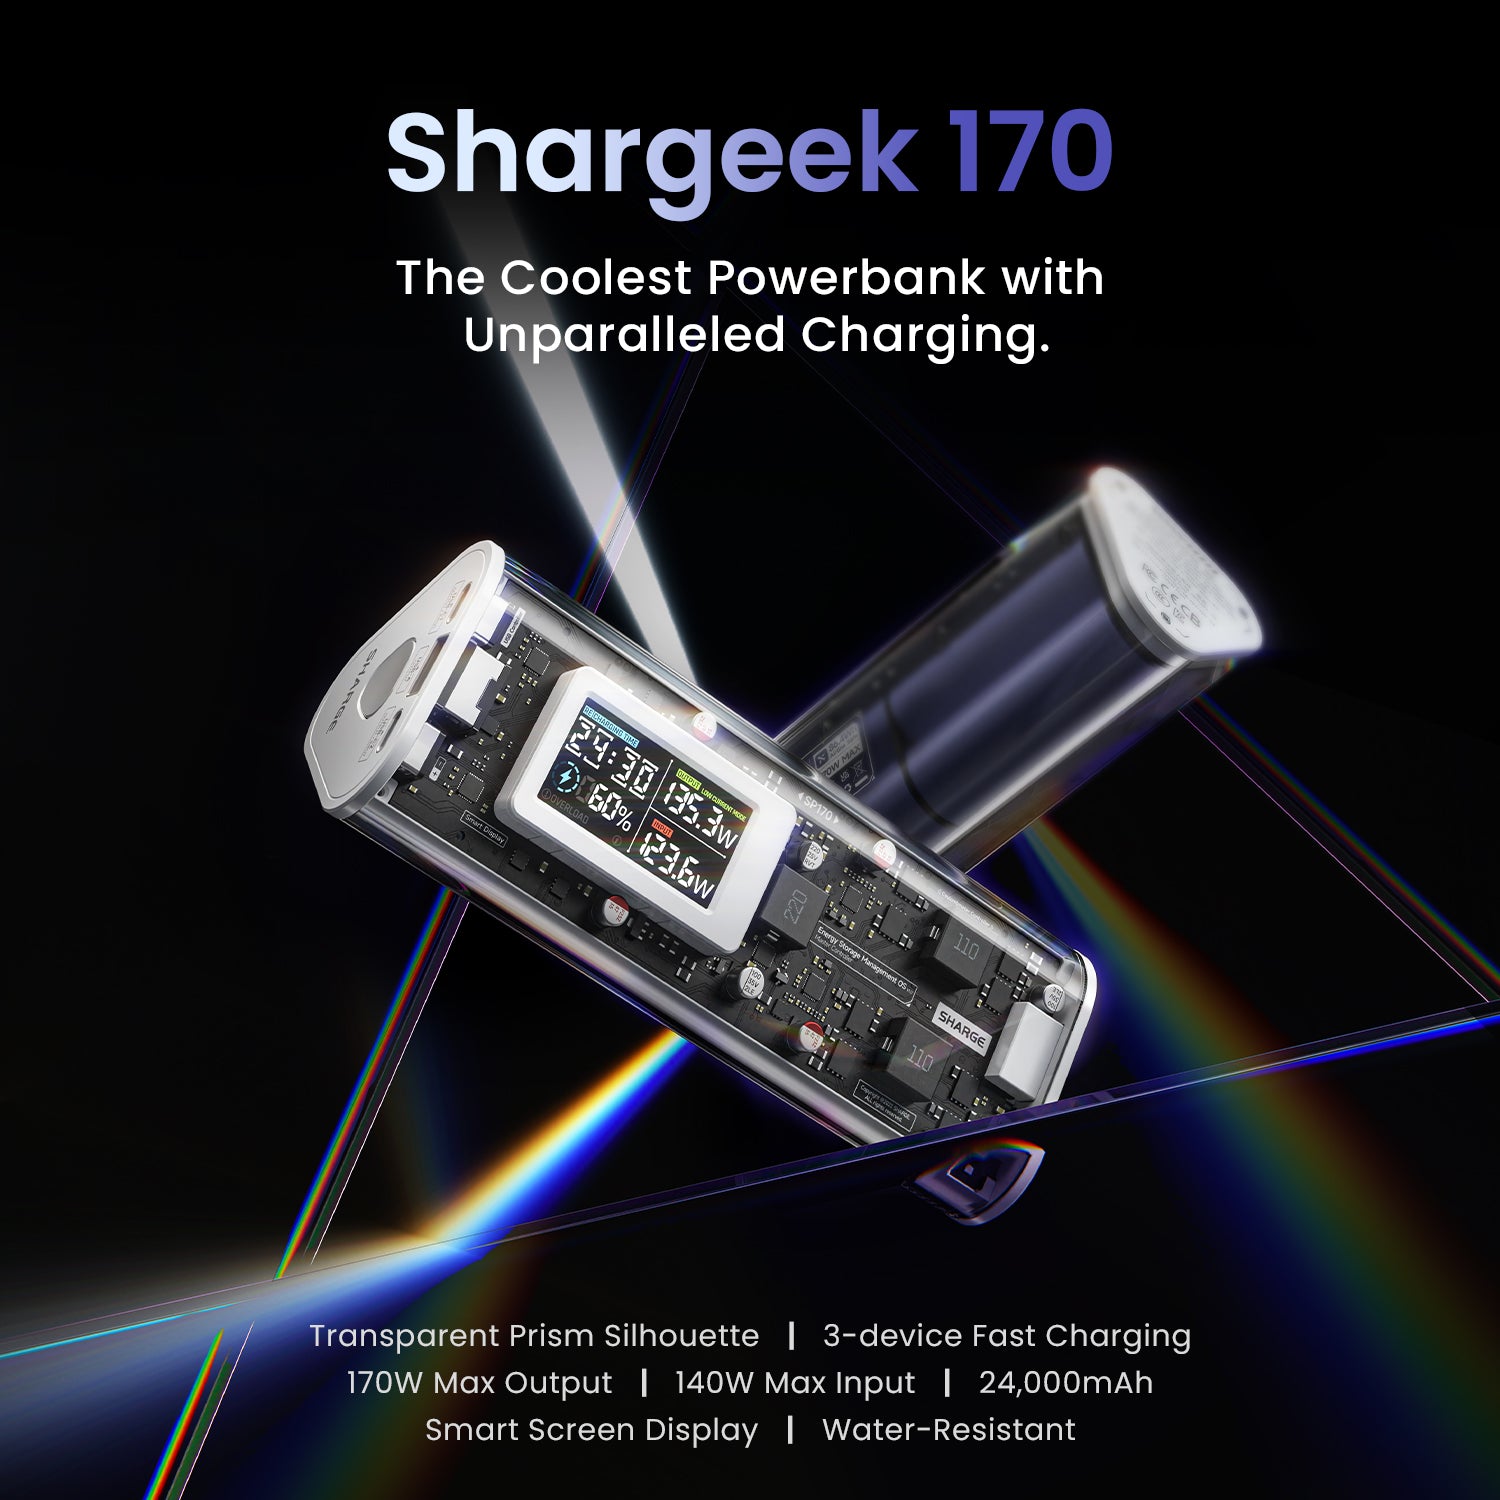 Shargeek 170 Powerbank